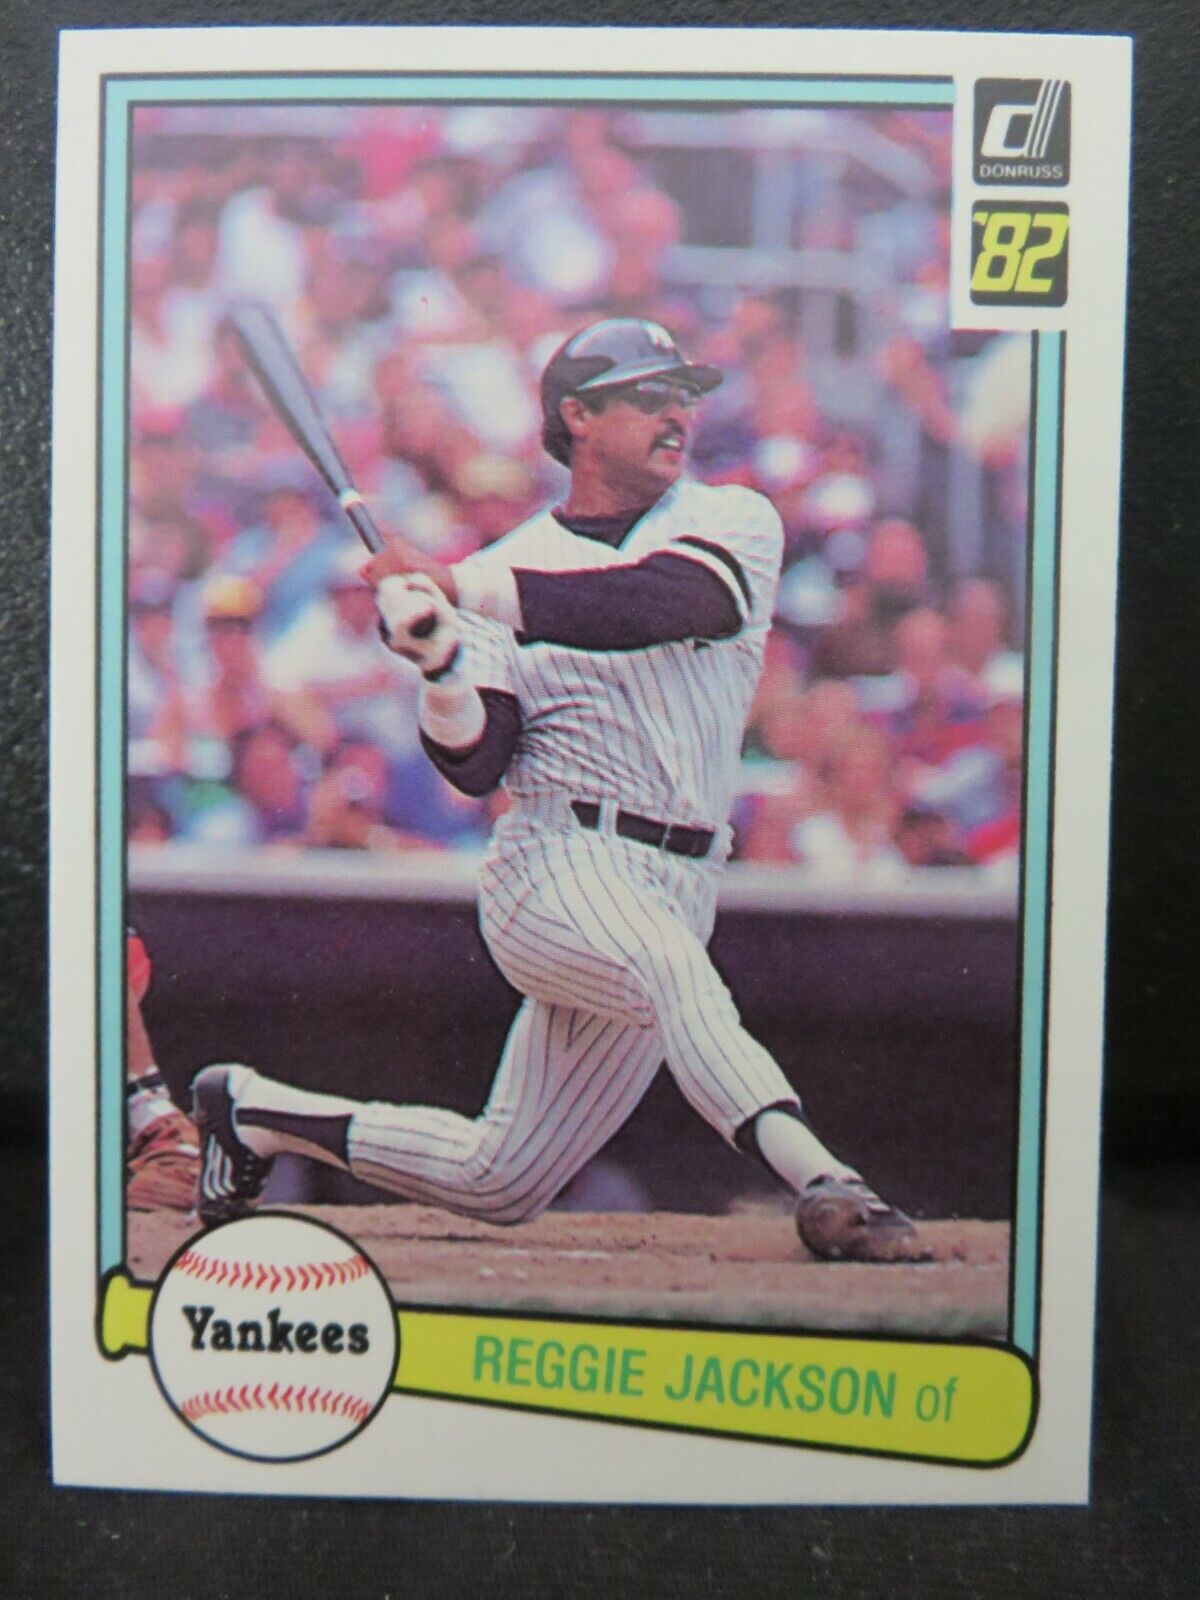 1982 Donruss Baseball Card. \'Set Break\' HOF Reggie Jackson #535 Yankees NM/MT